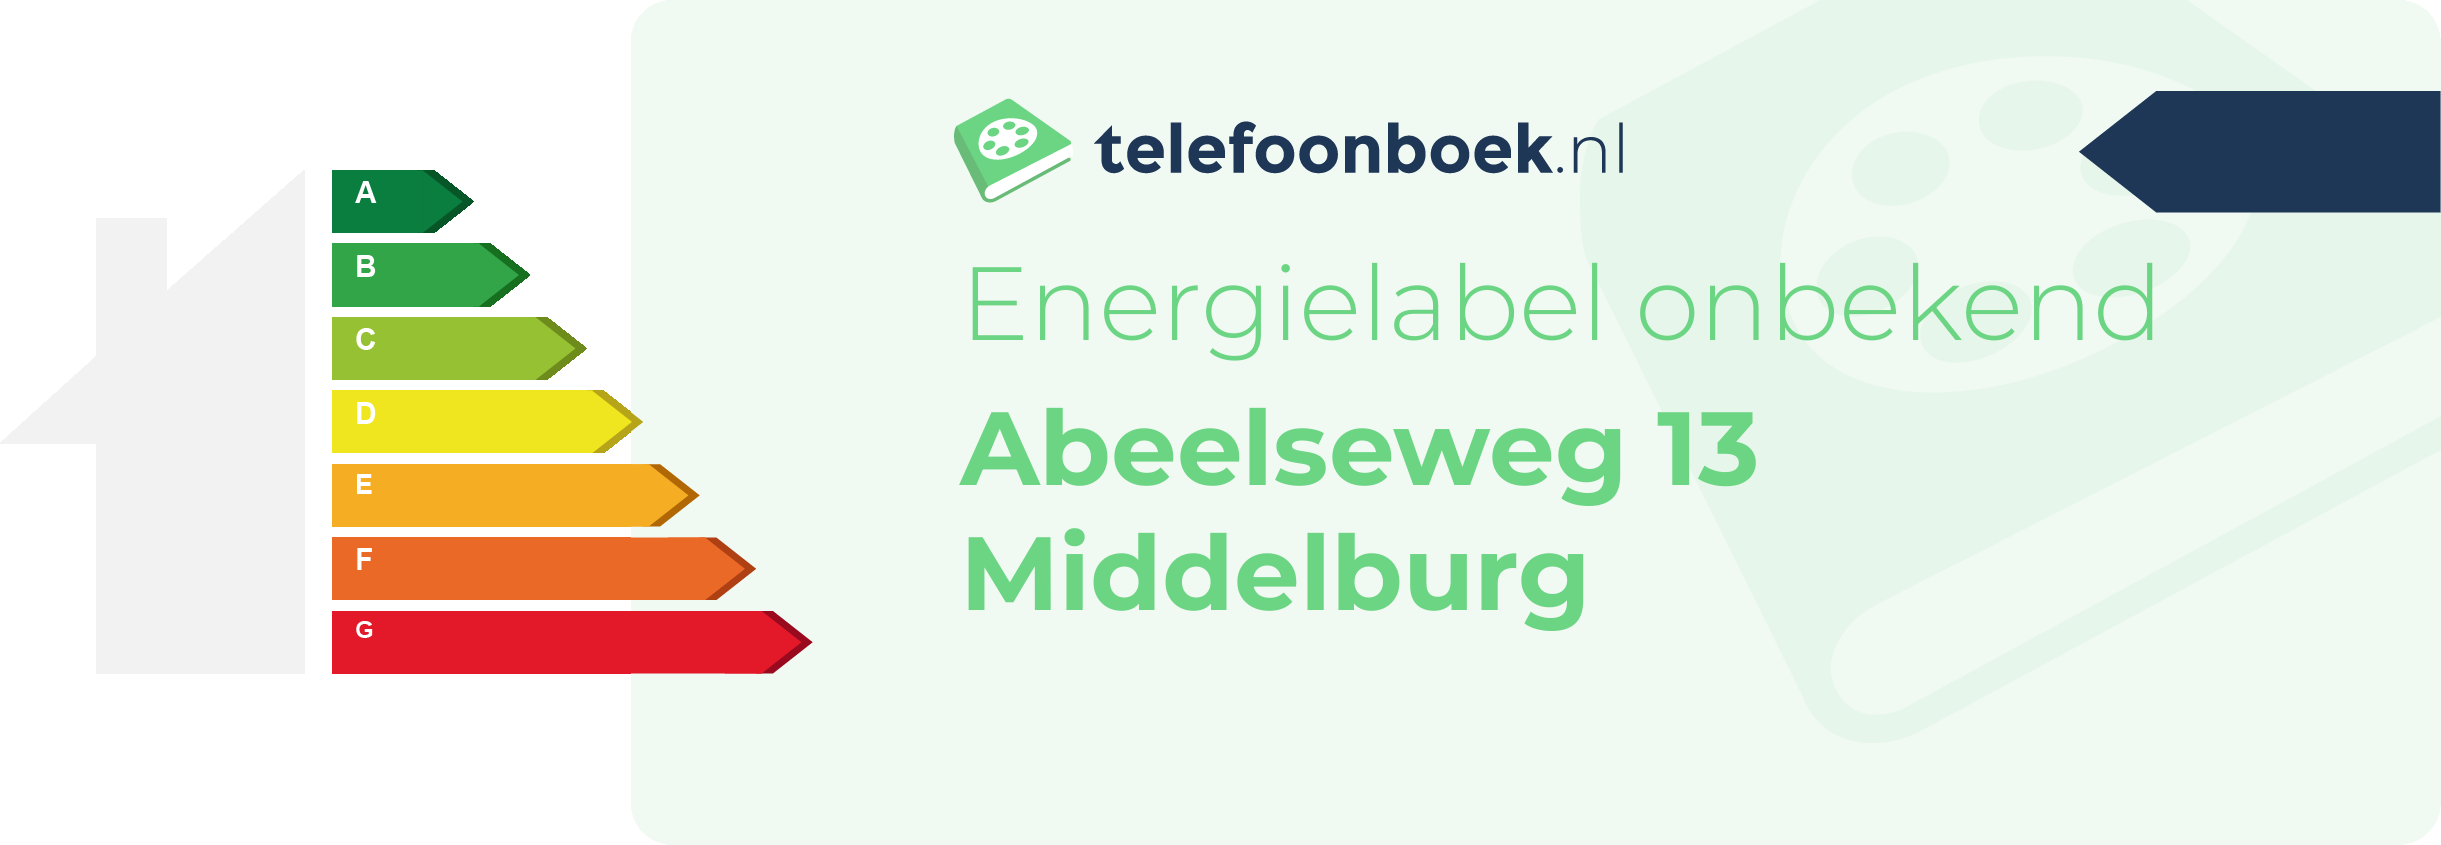 Energielabel Abeelseweg 13 Middelburg